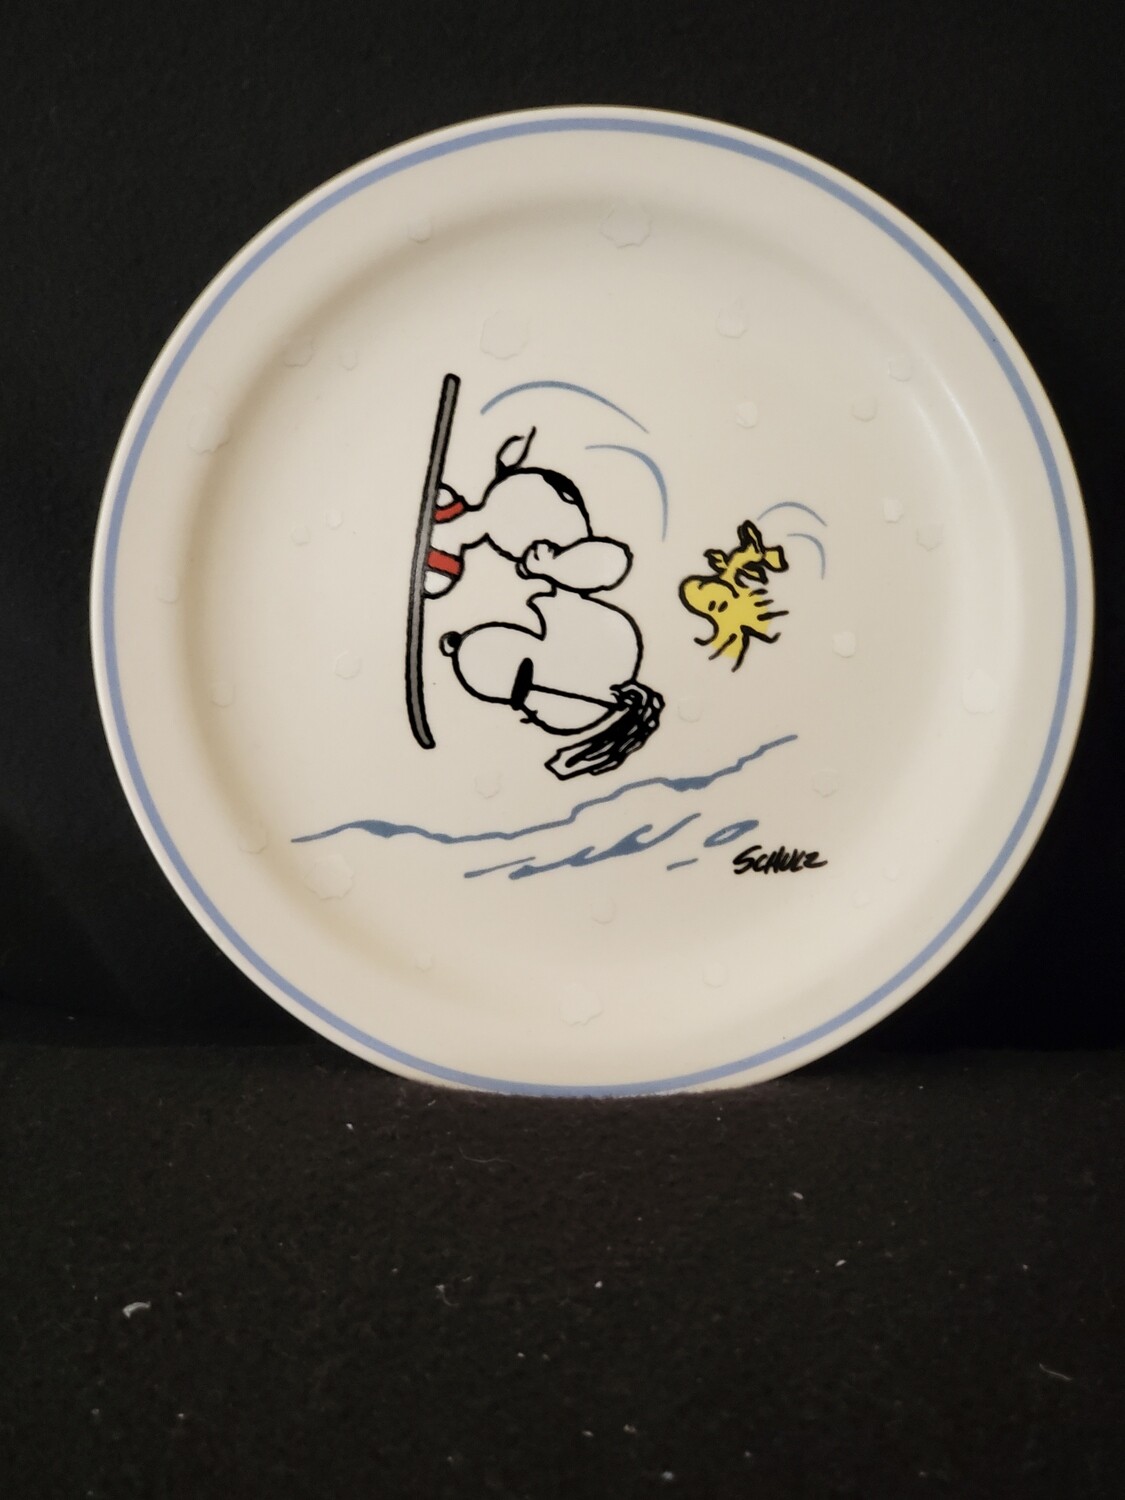 Peanuts, Snoopy Winter Scene, Set of 3 Snack Plates, by Schultz, Hallmark